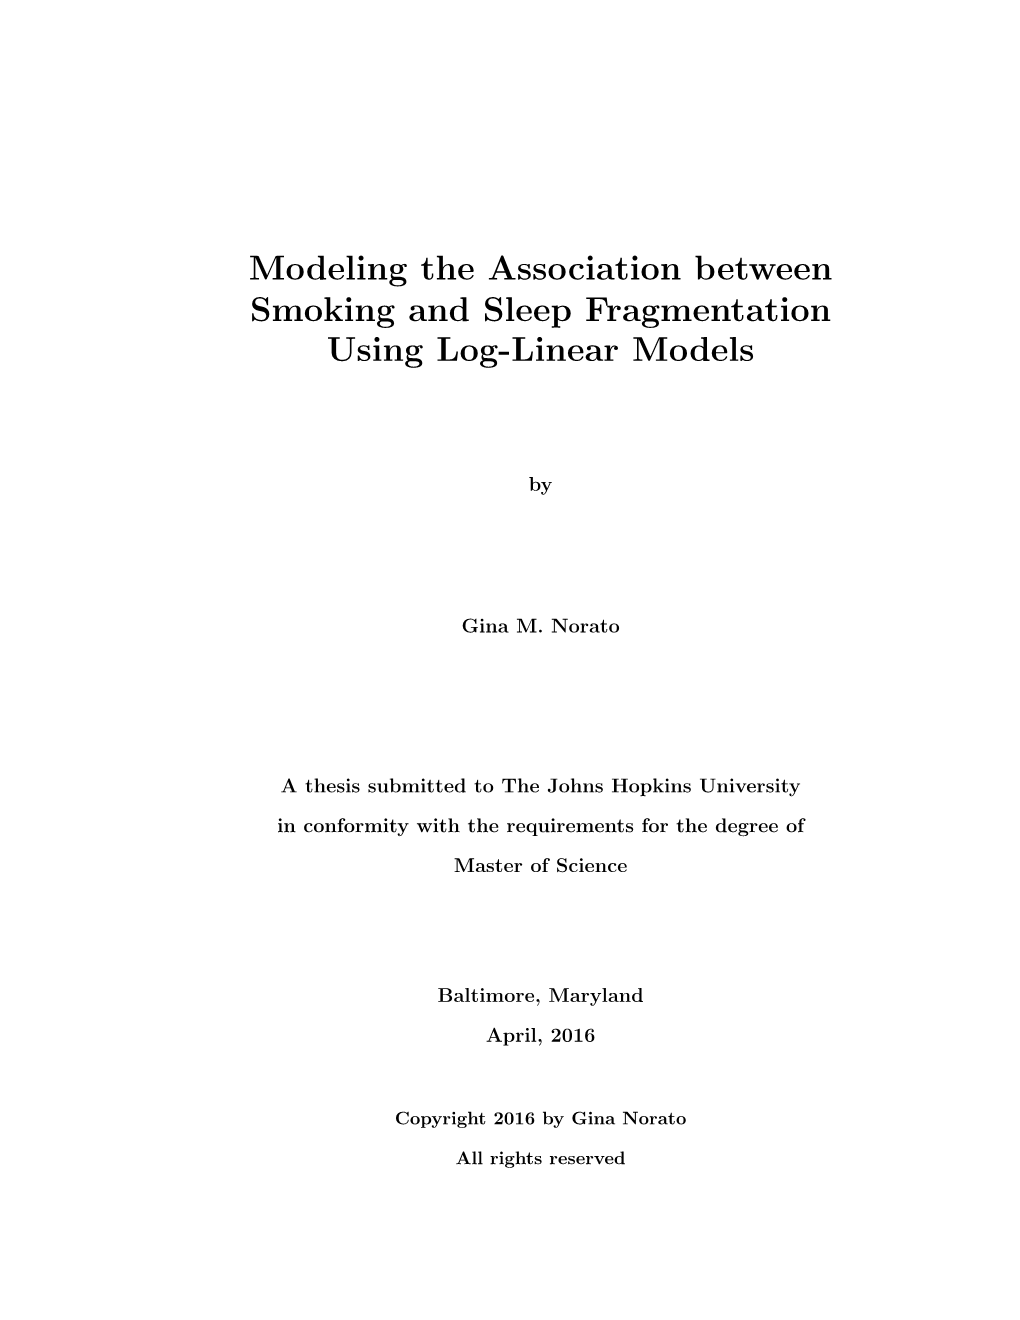 Modeling the Association Between Smoking and Sleep Fragmentation Using Log-Linear Models